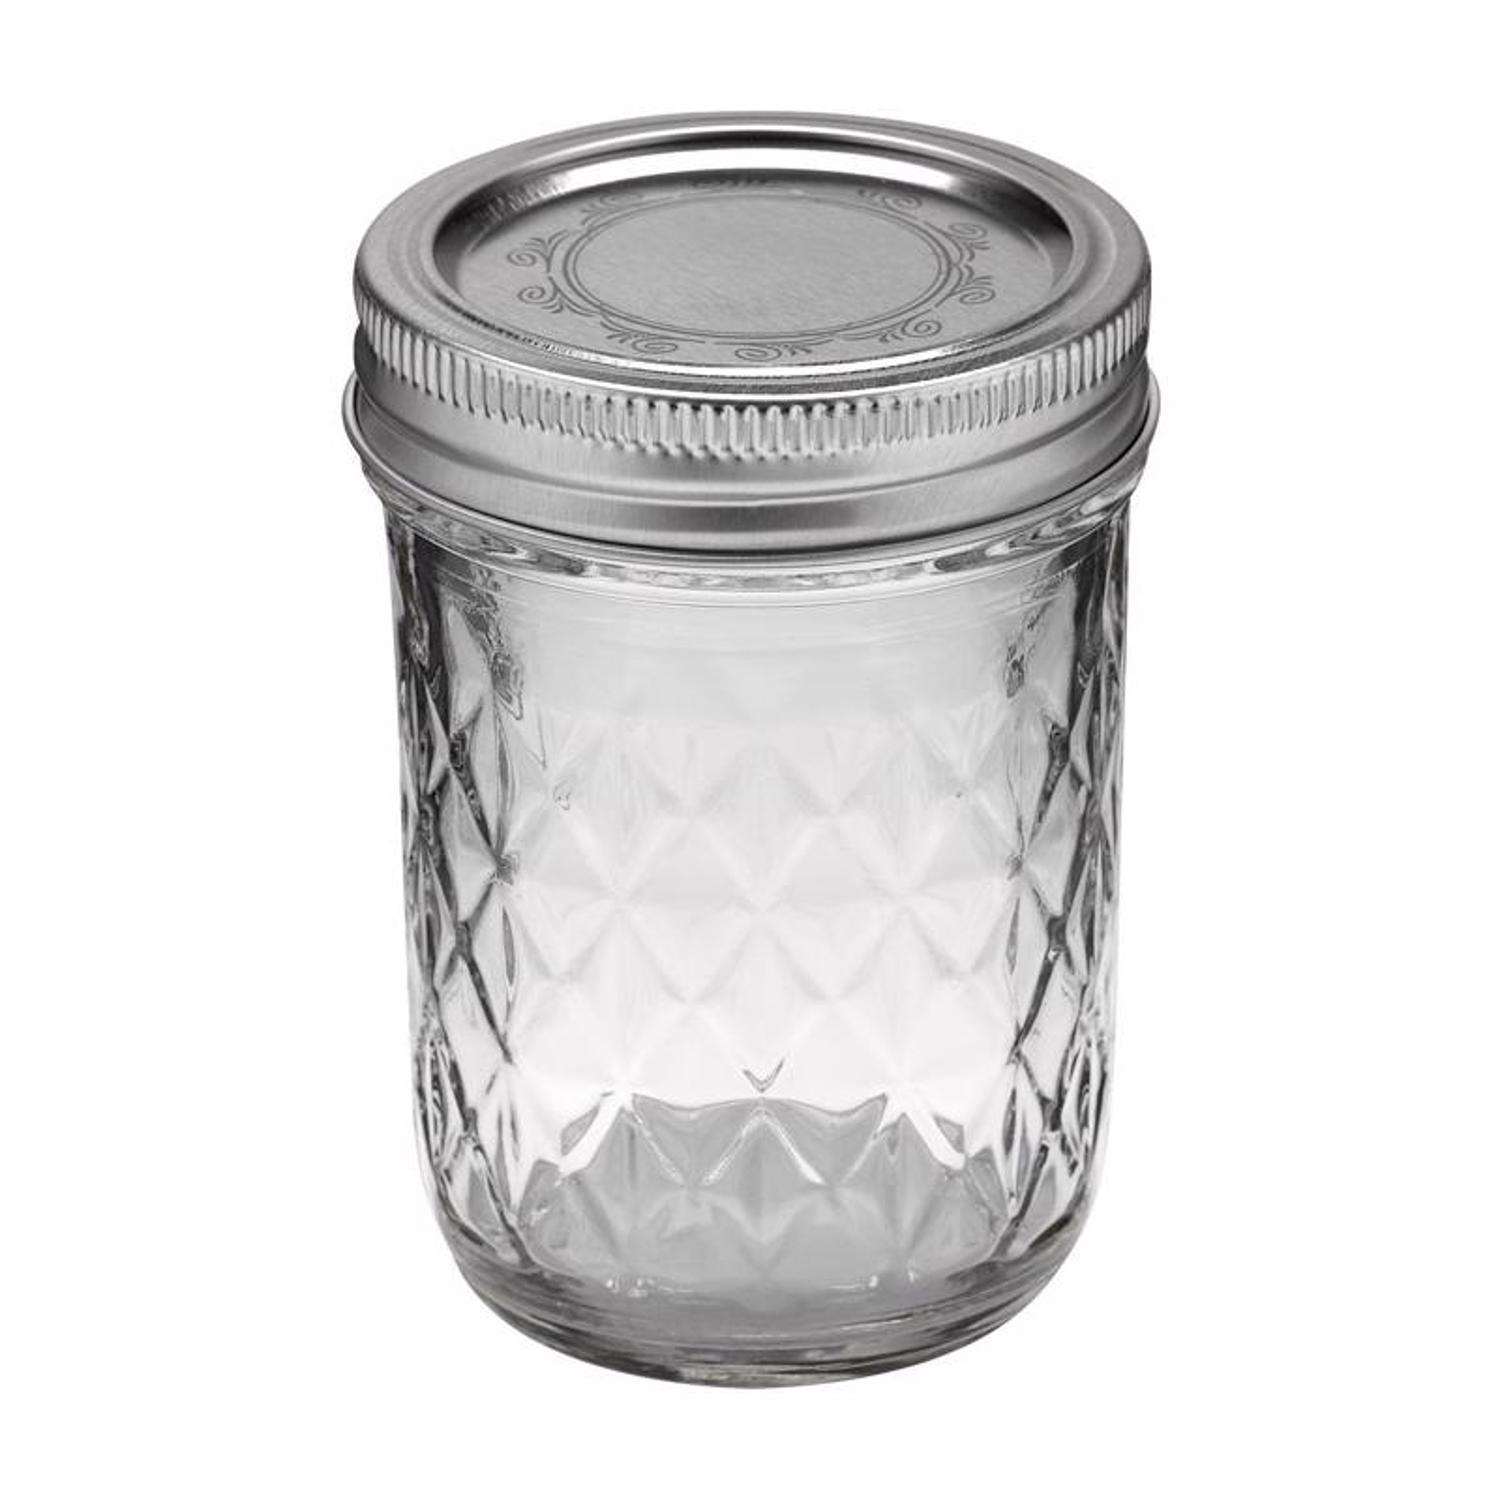 Ball Regular Mouth Mason Jars 8 oz, 12 Pack Canning Jars, With